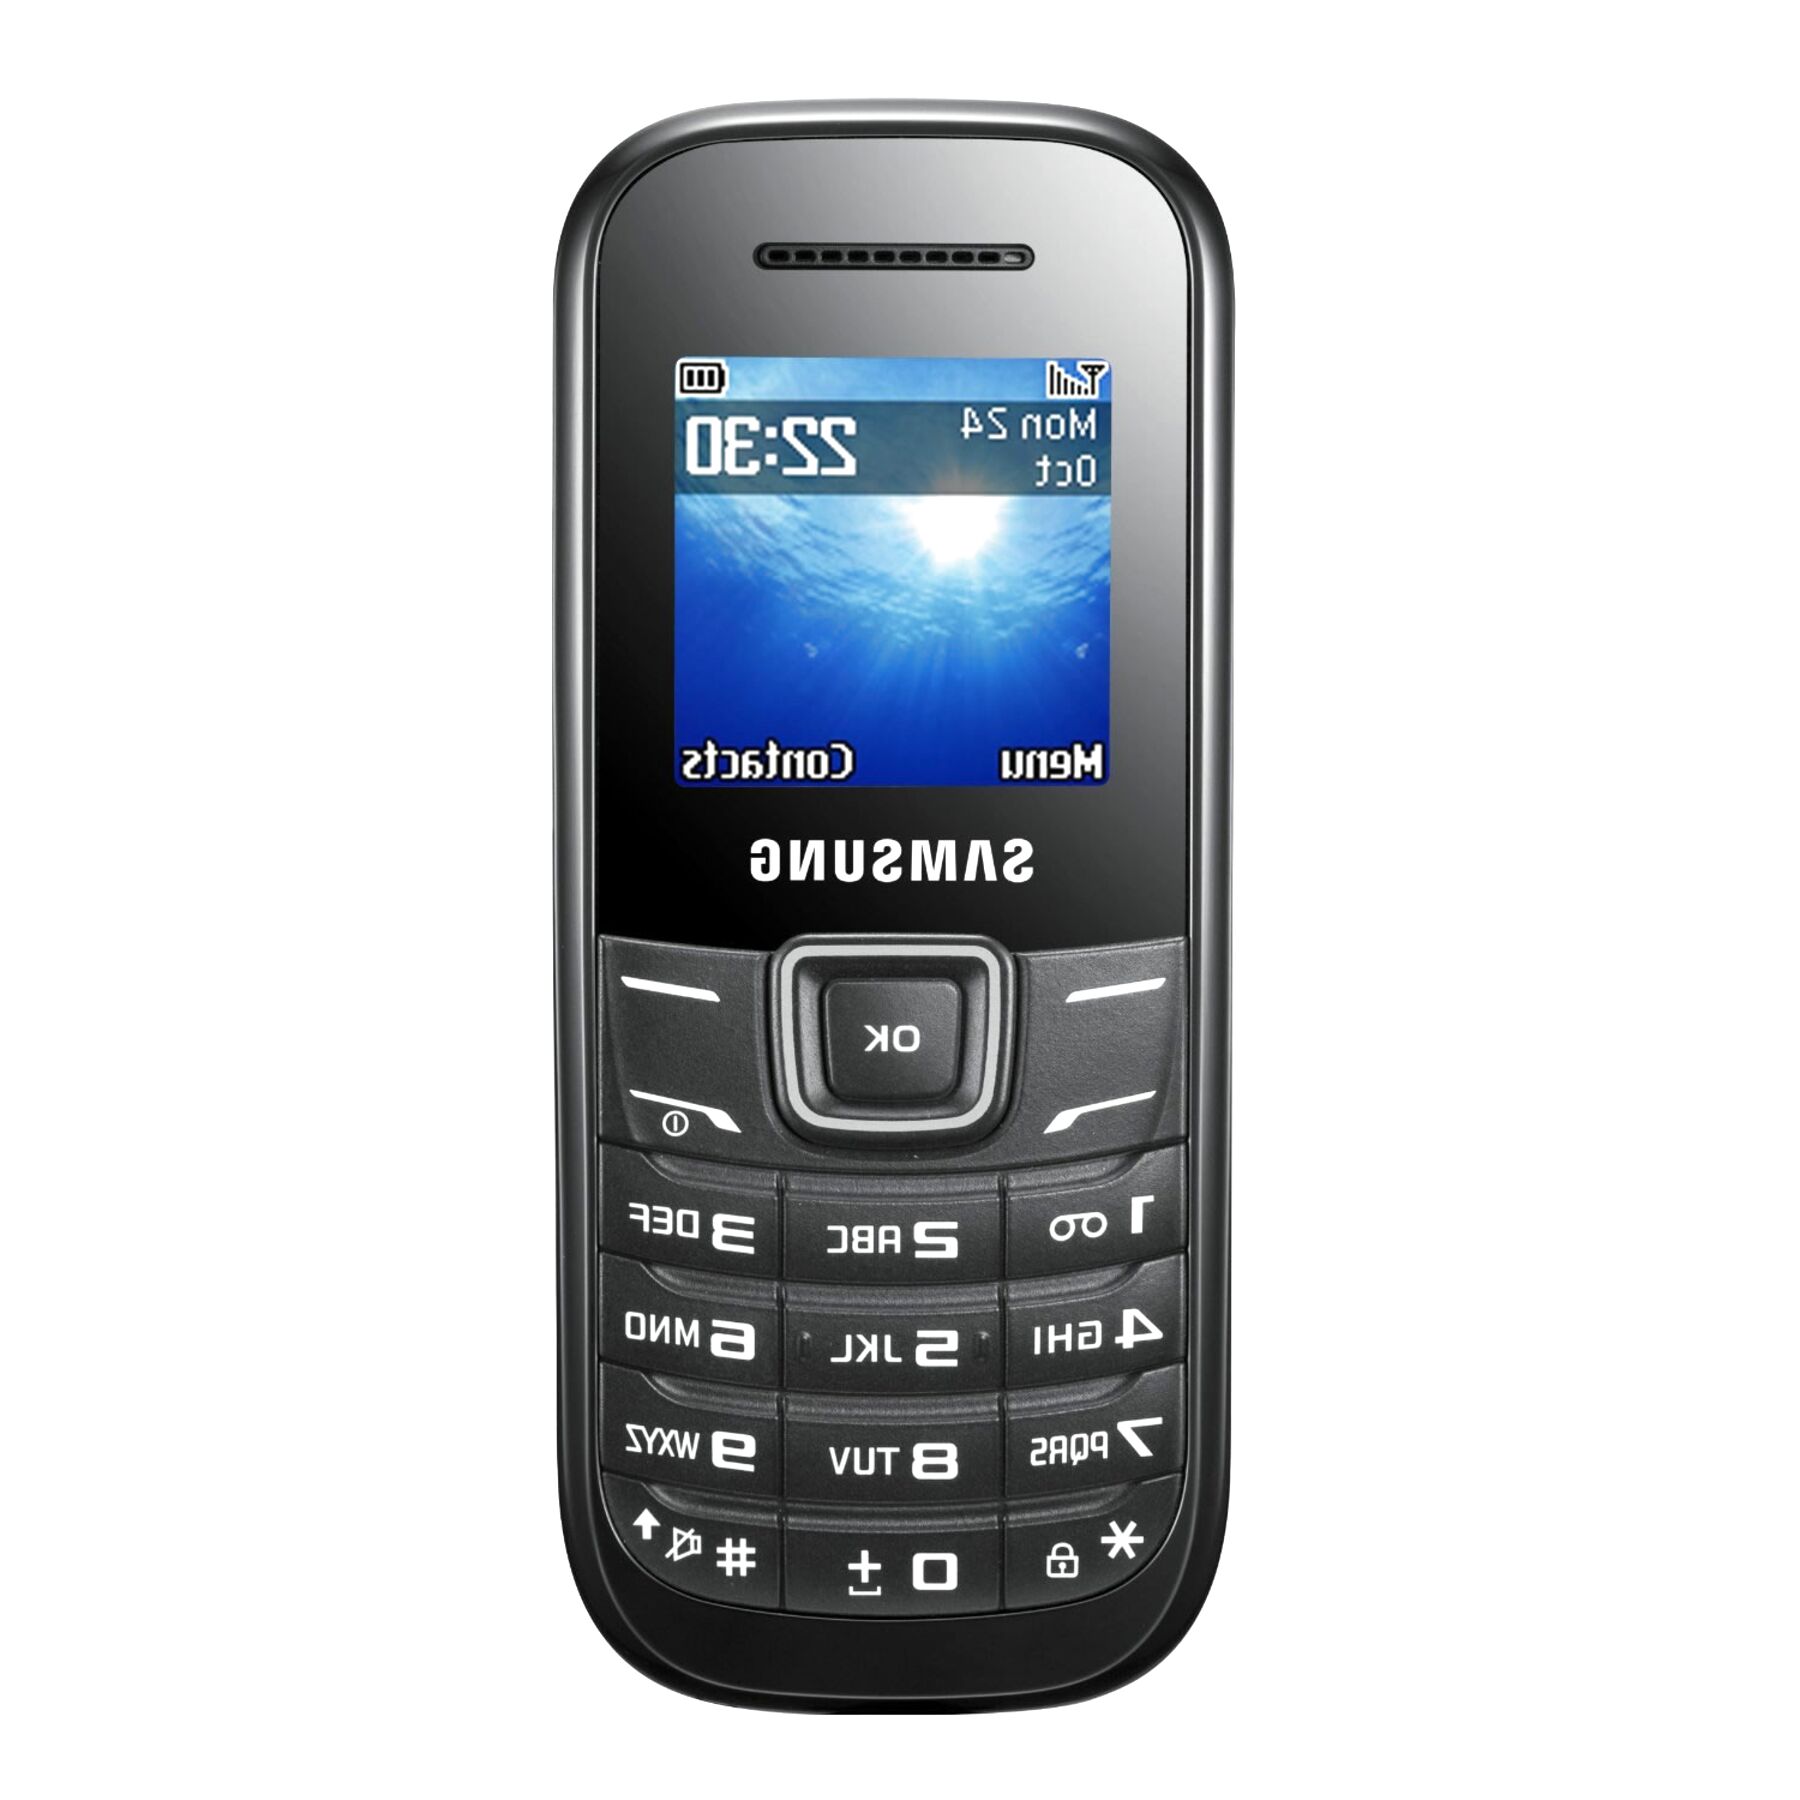 Unlocked Samsung Mobile Phones For Sale In Uk 92 Used Unlocked